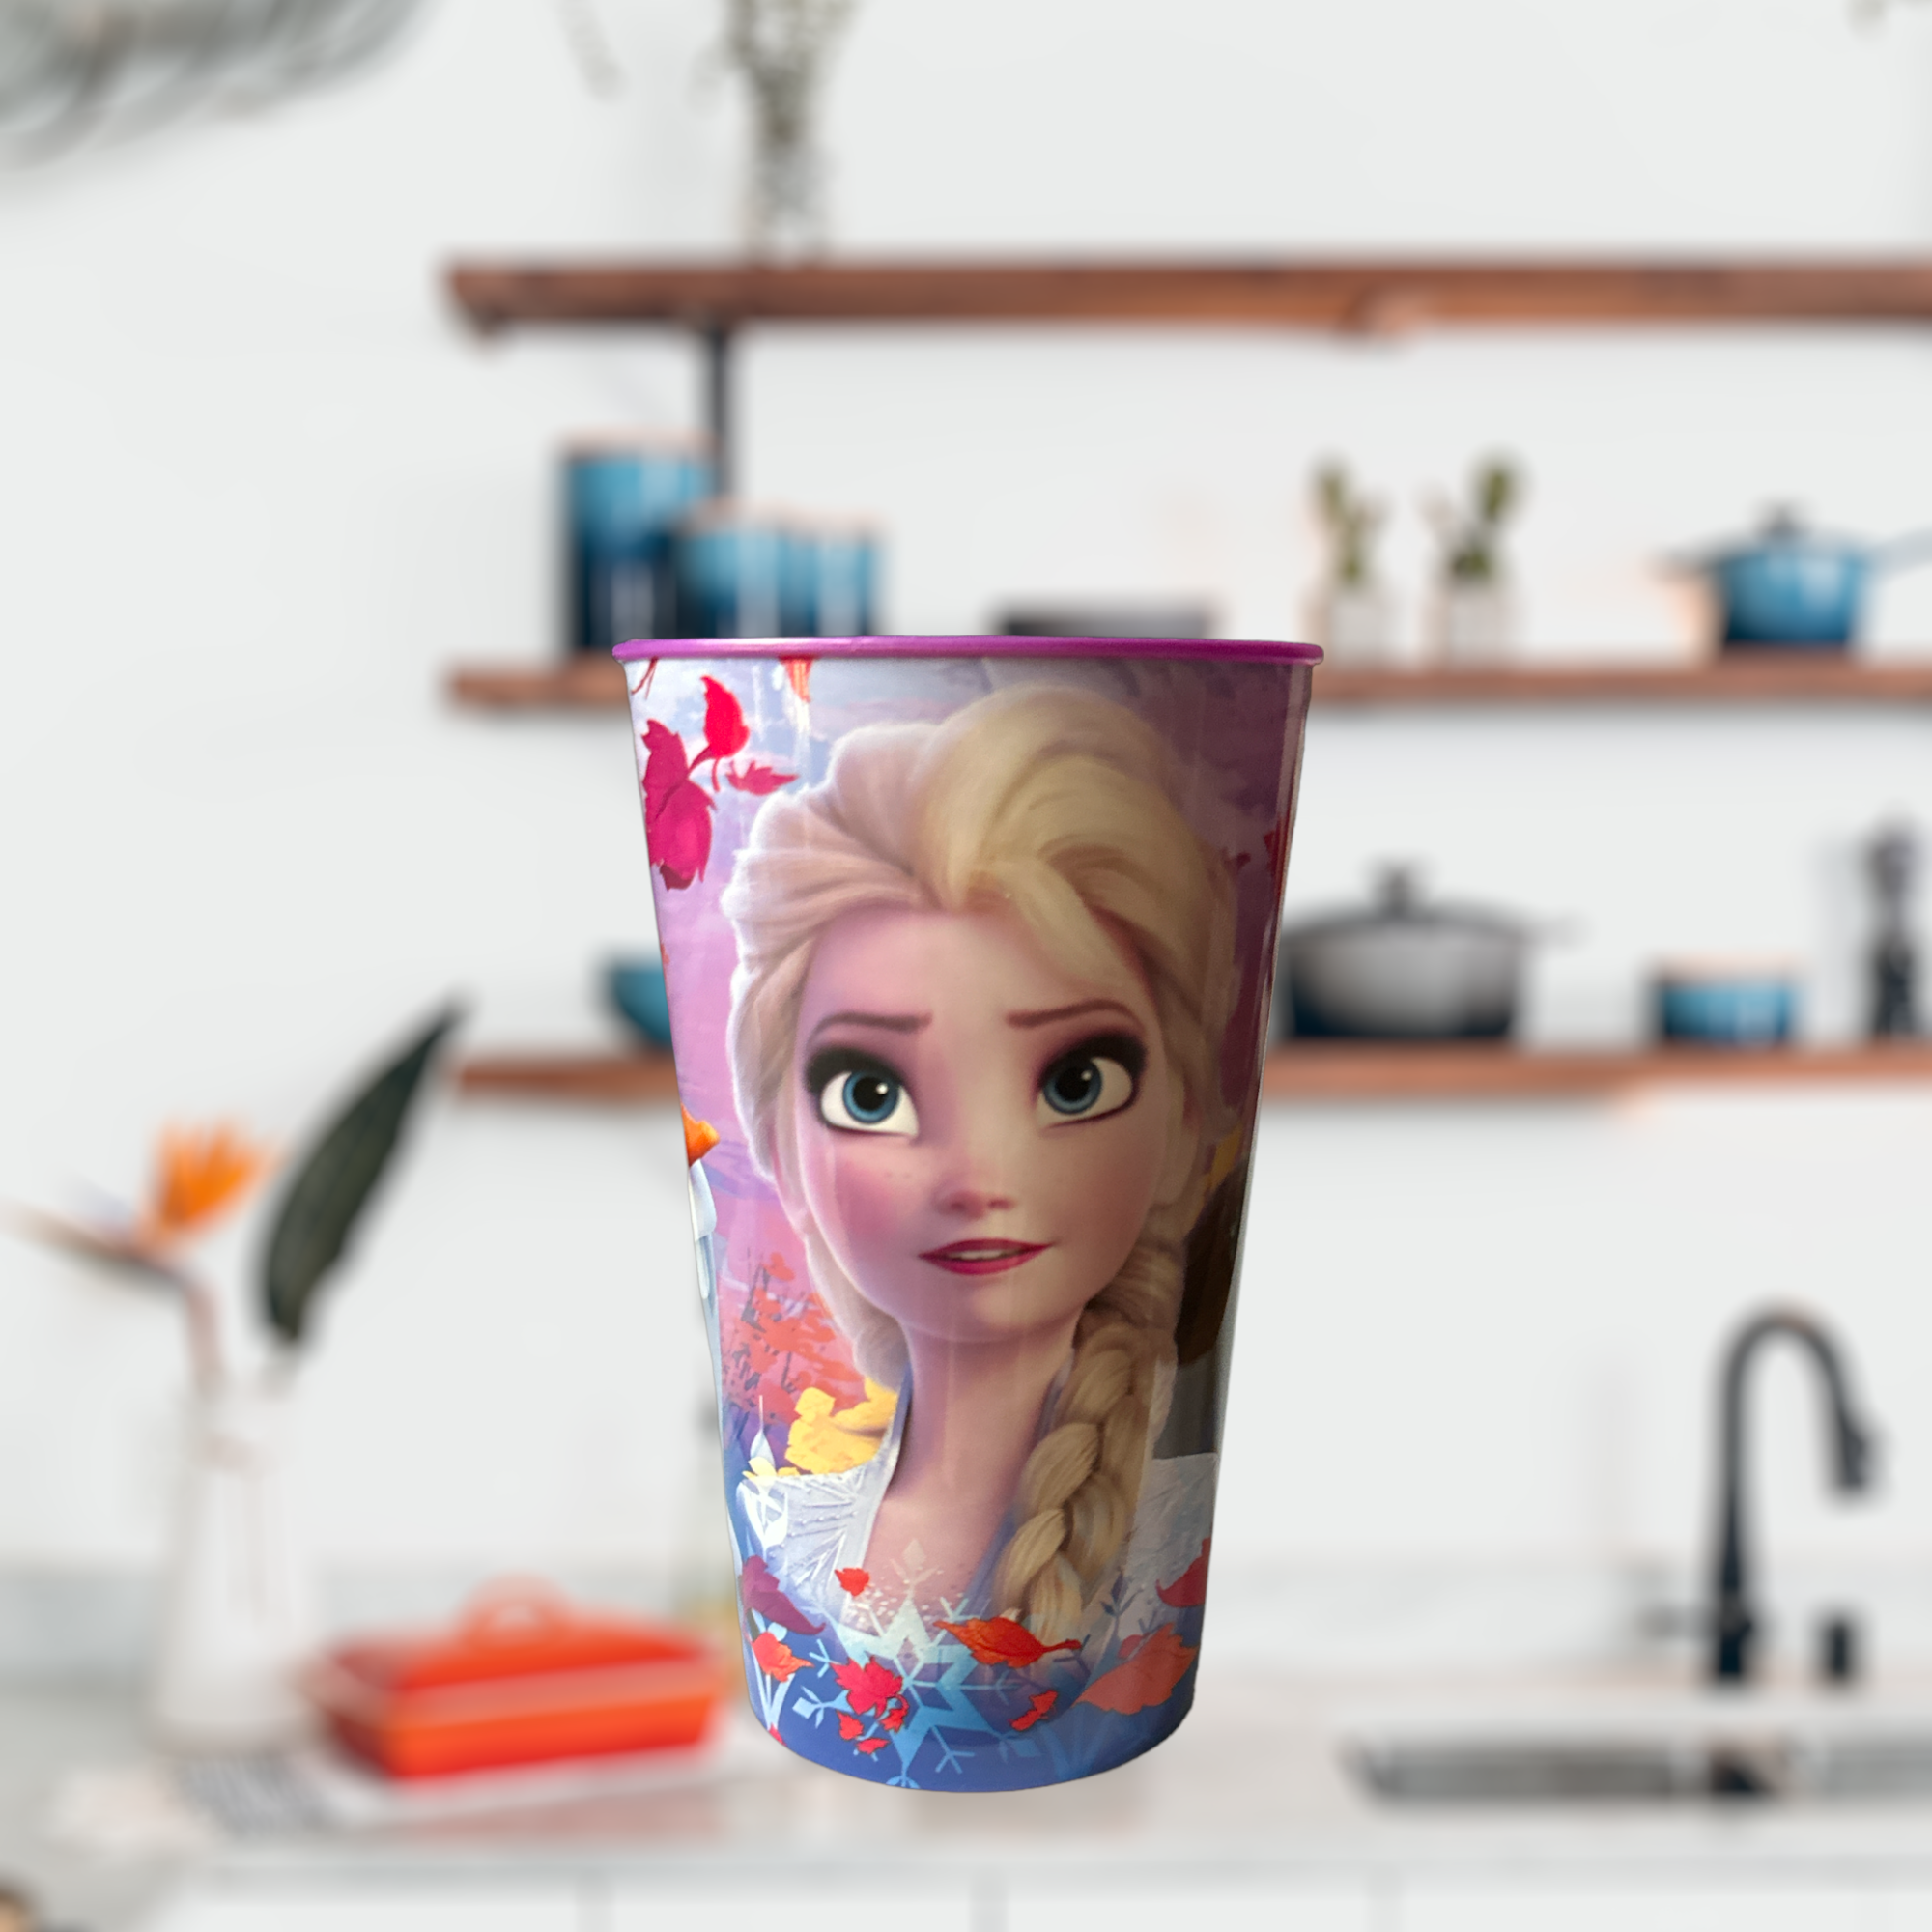 Disney - La reine des neiges : Gobelet en plastique